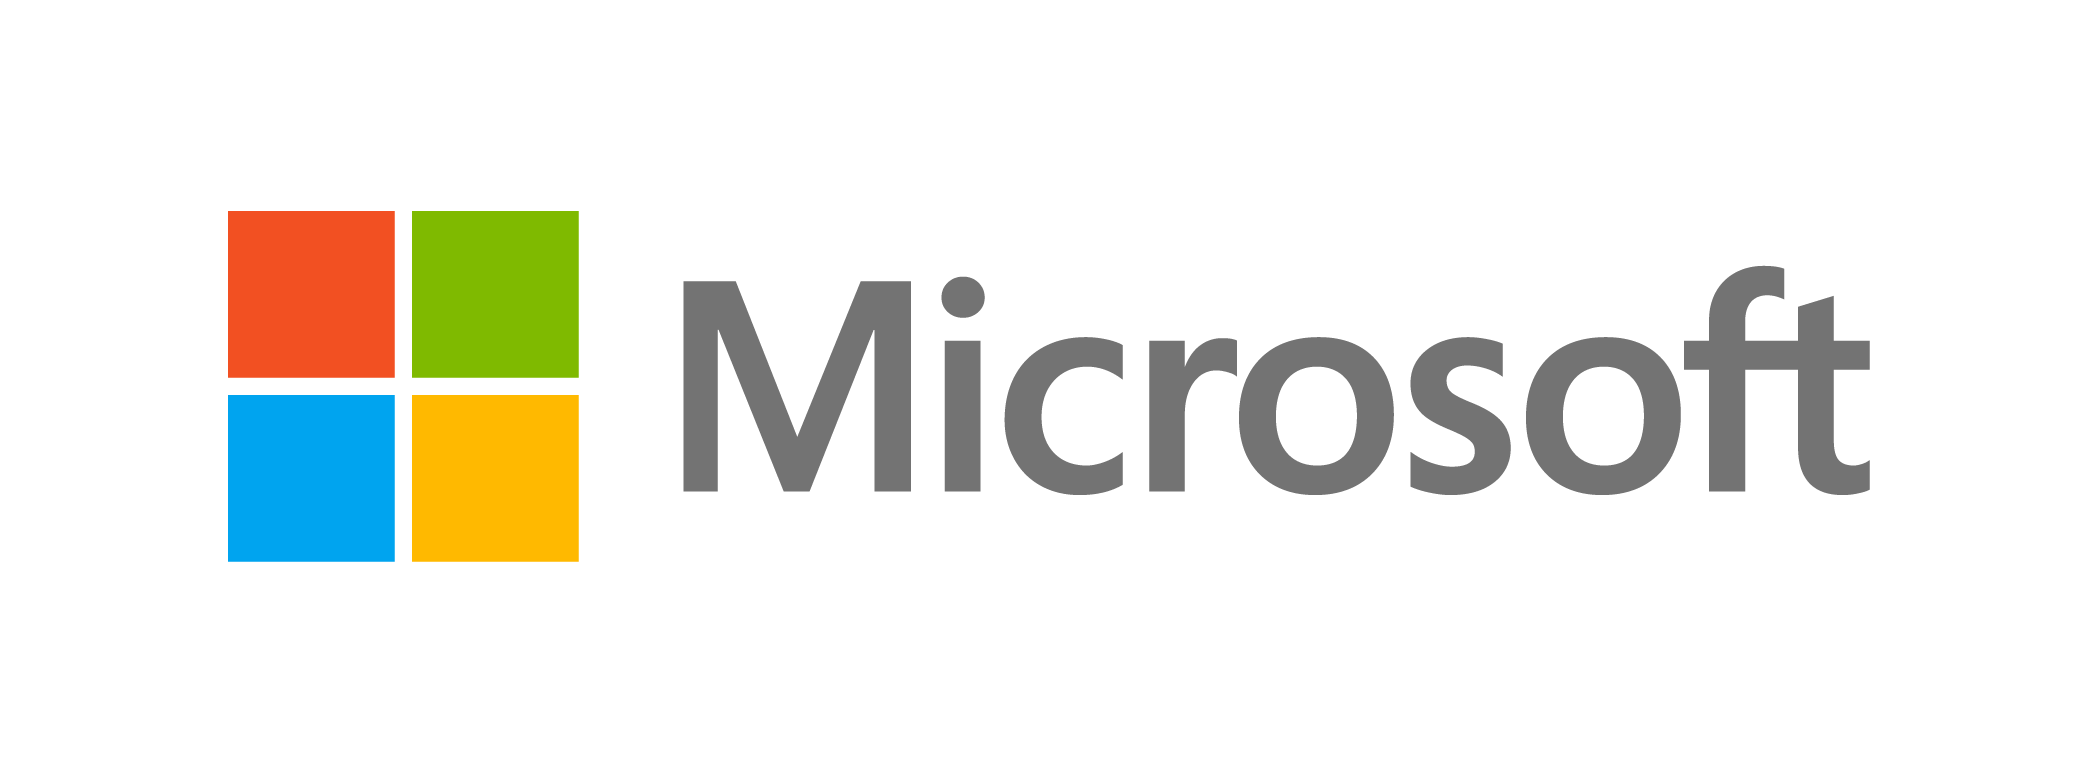 Windows 9 Logo - Microsoft Skips Windows 9, Introduces Windows 10